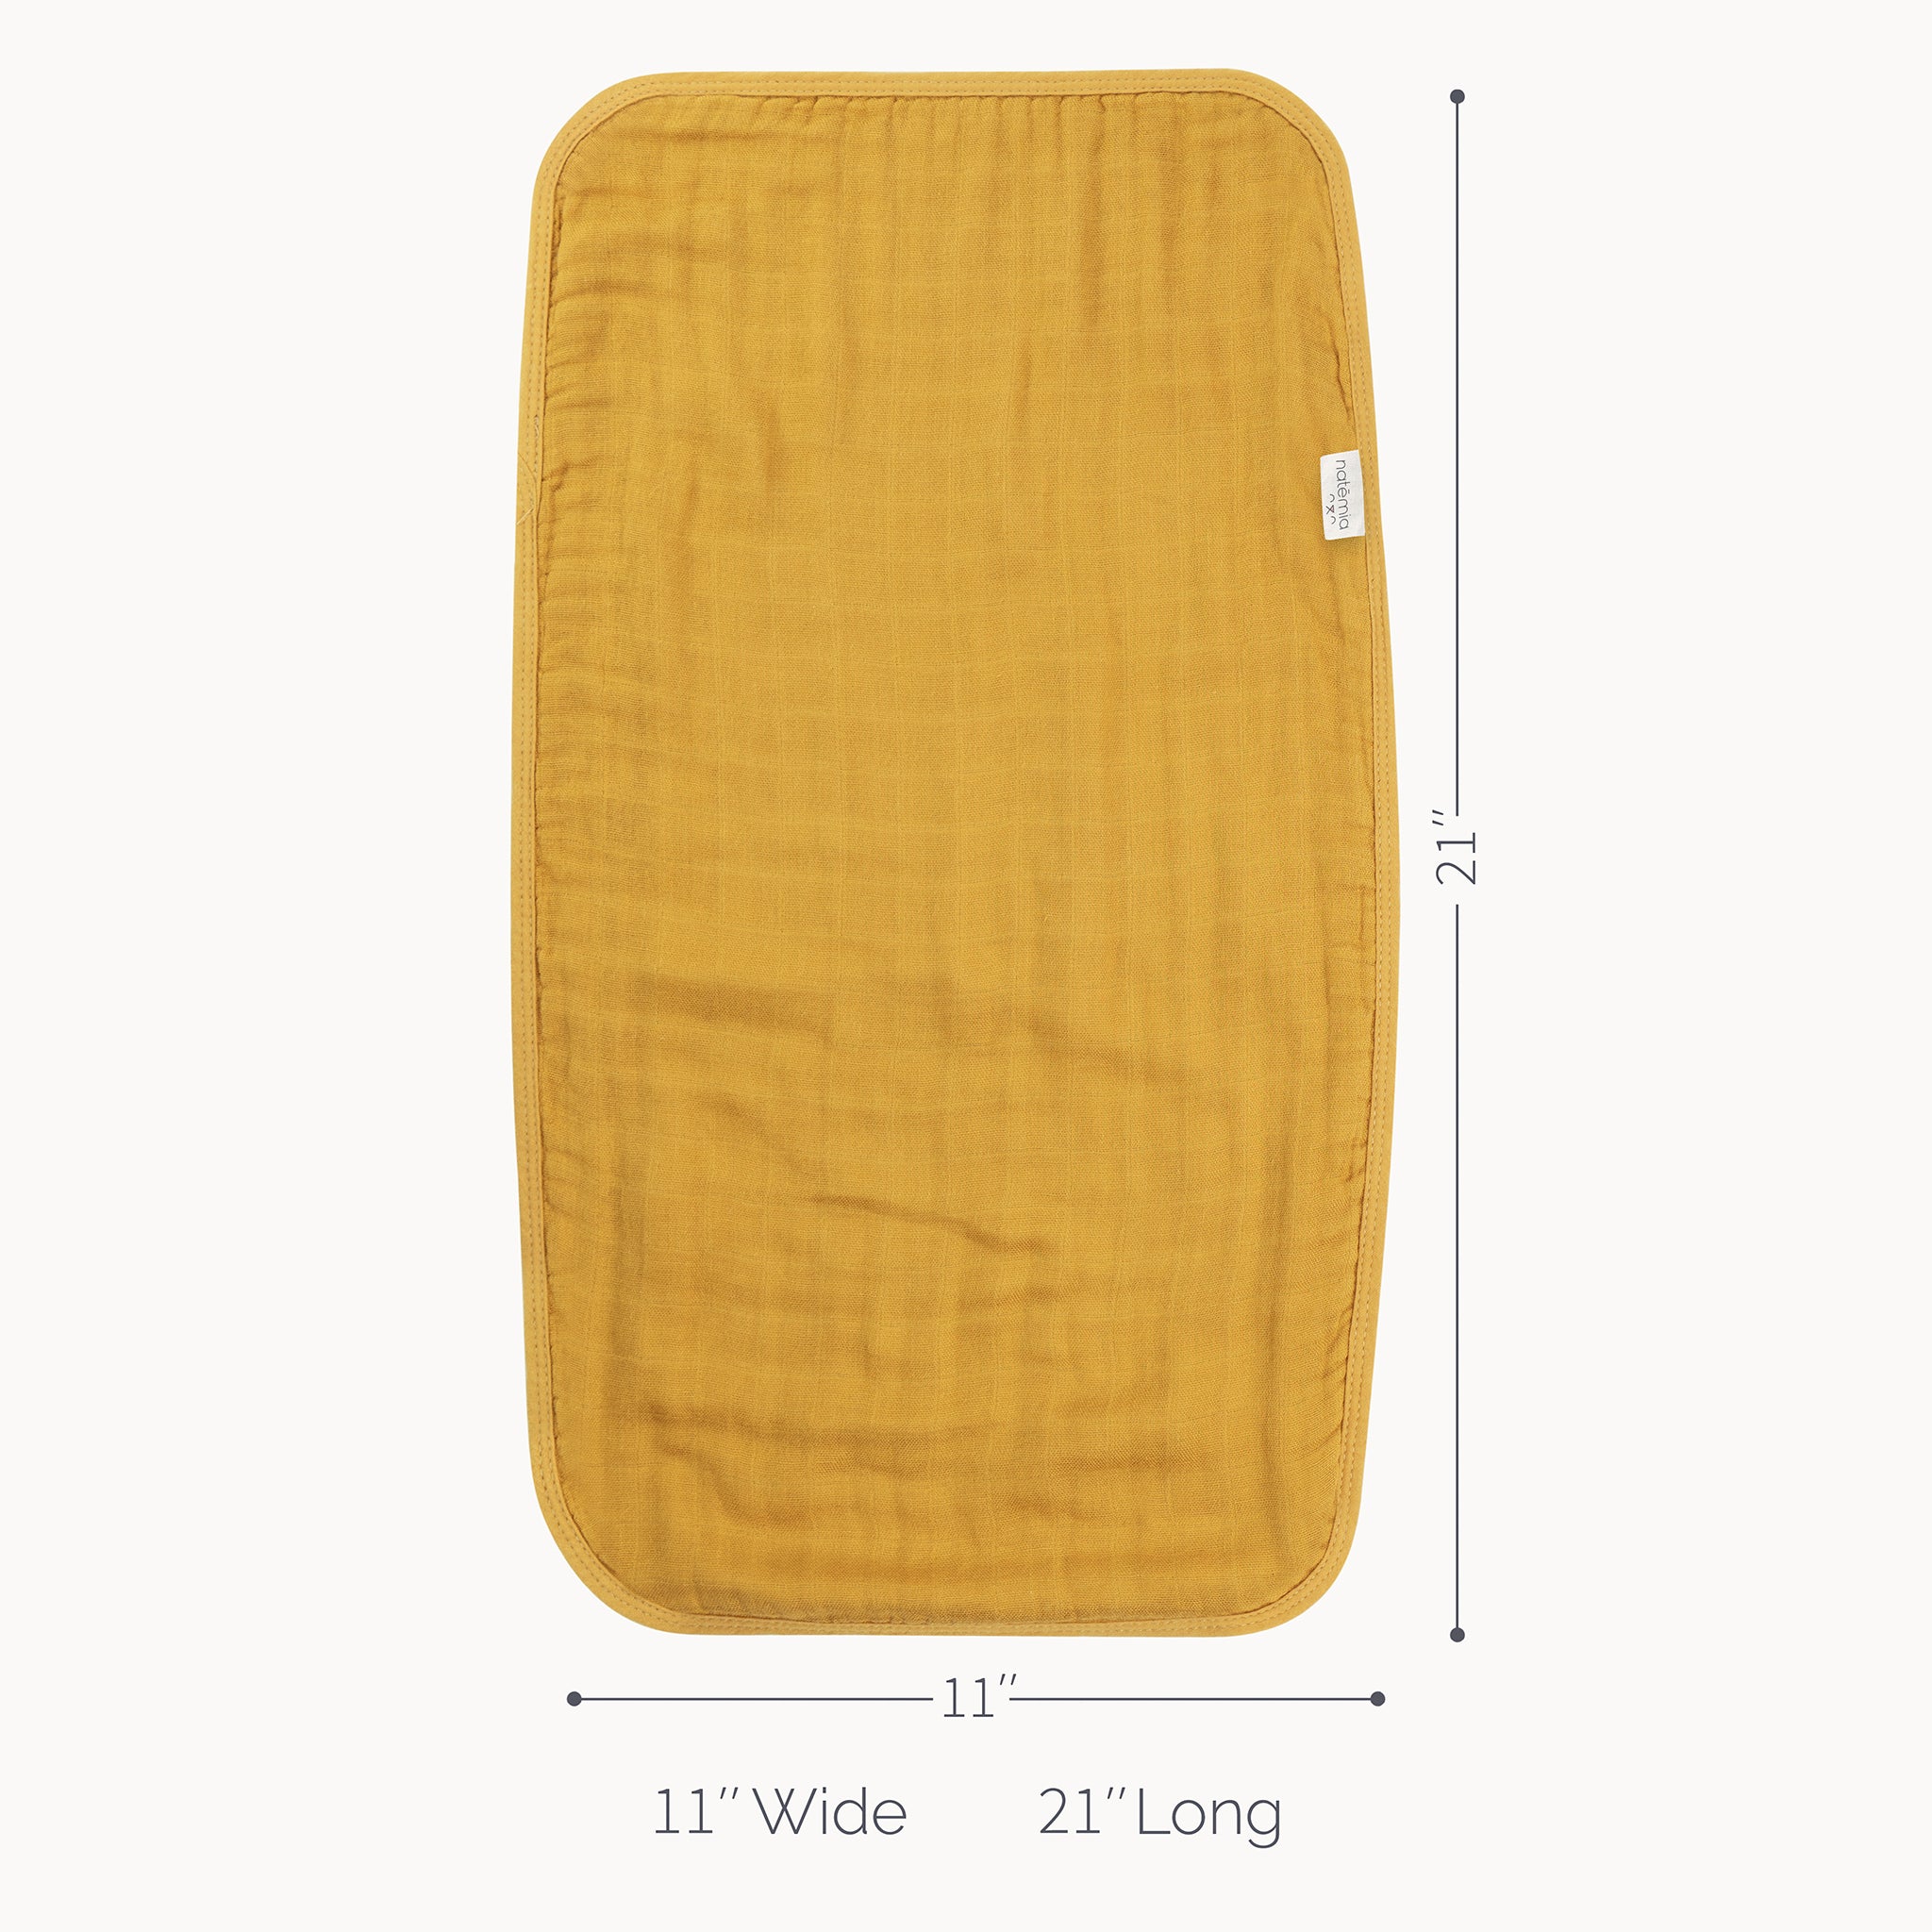 Ultra Soft Muslin Bamboo Burp Cloths - 3 Pack - Natemia